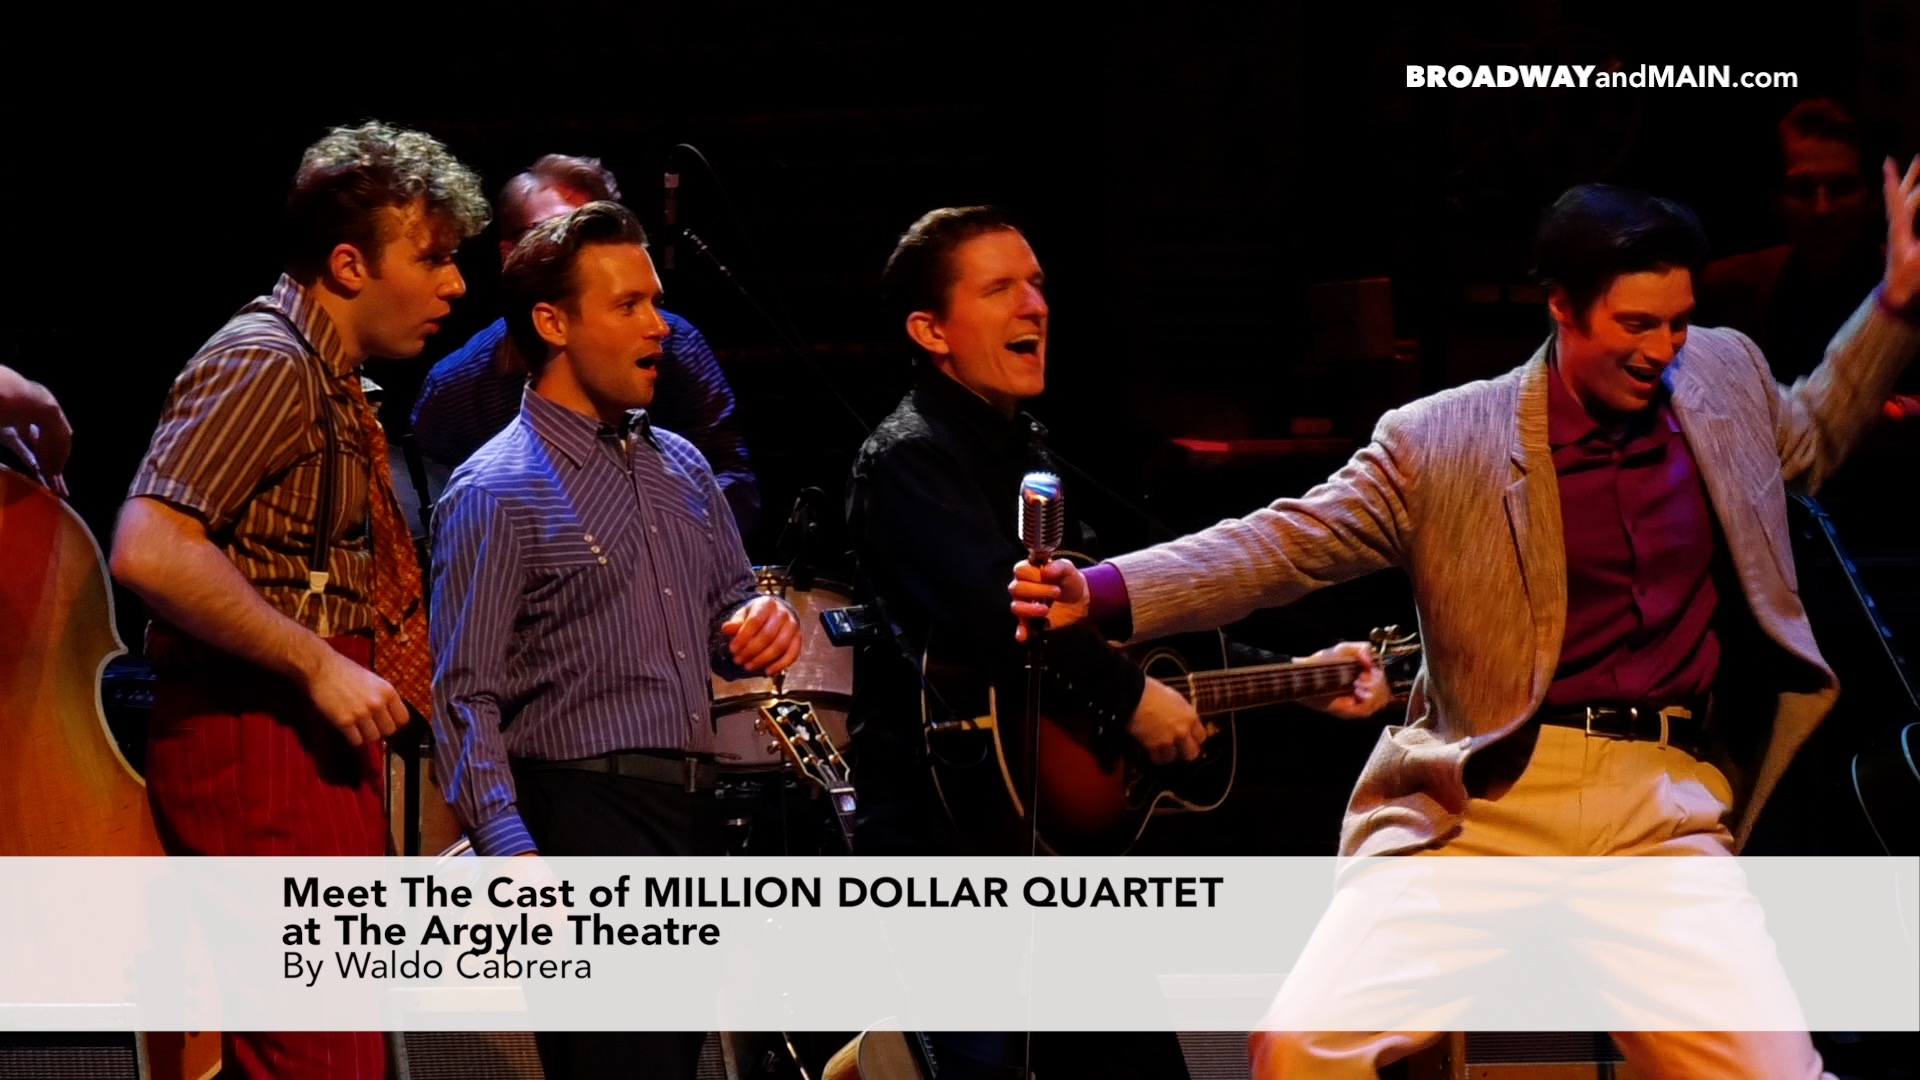 Meet The Cast of Million Dollar Quartet at the Argyle Theatre